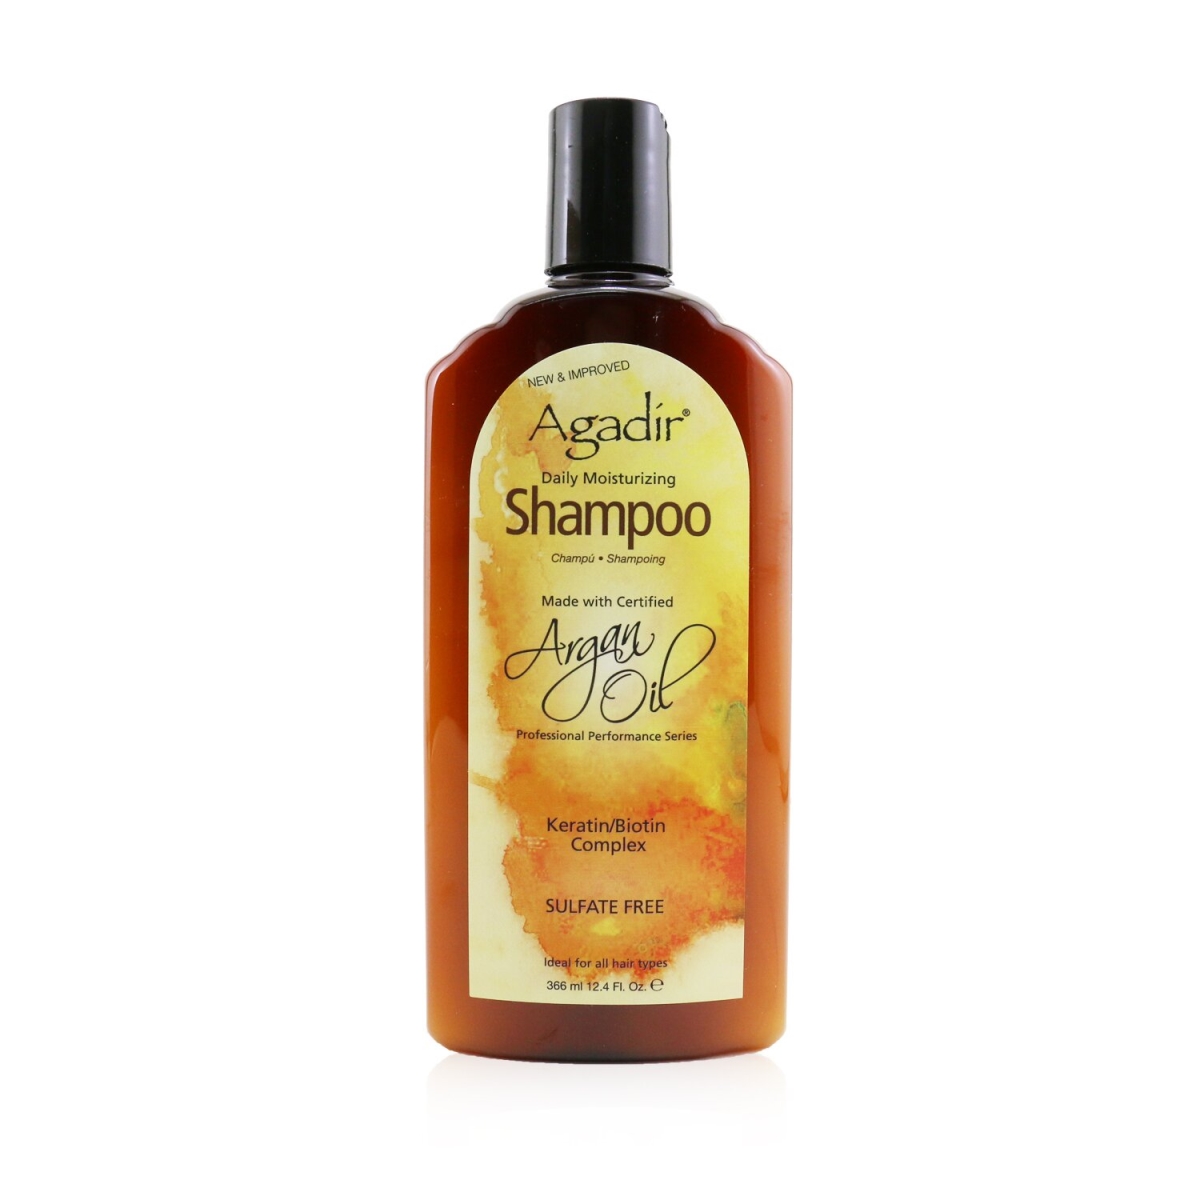 Picture of Agadir Argan Oil 247784 12.4 oz Daily Moisturizing Shampoo for Ideal All Hair Type